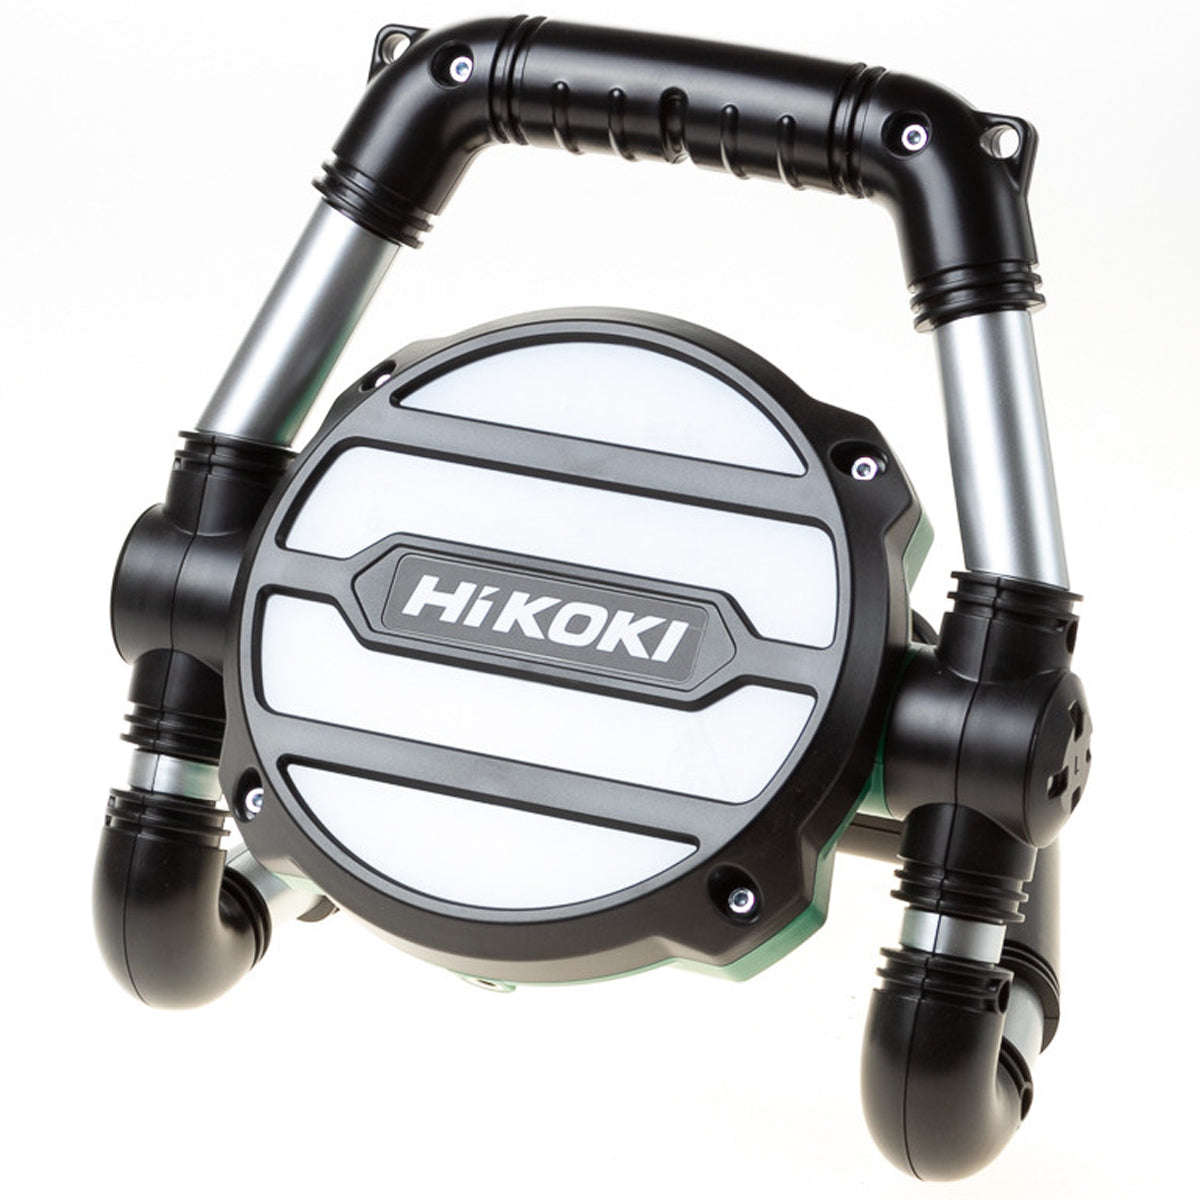 Hikoki UB18DGLZ 18V Cordless LED Work Light with 1 x 5.0Ah Battery & Charger